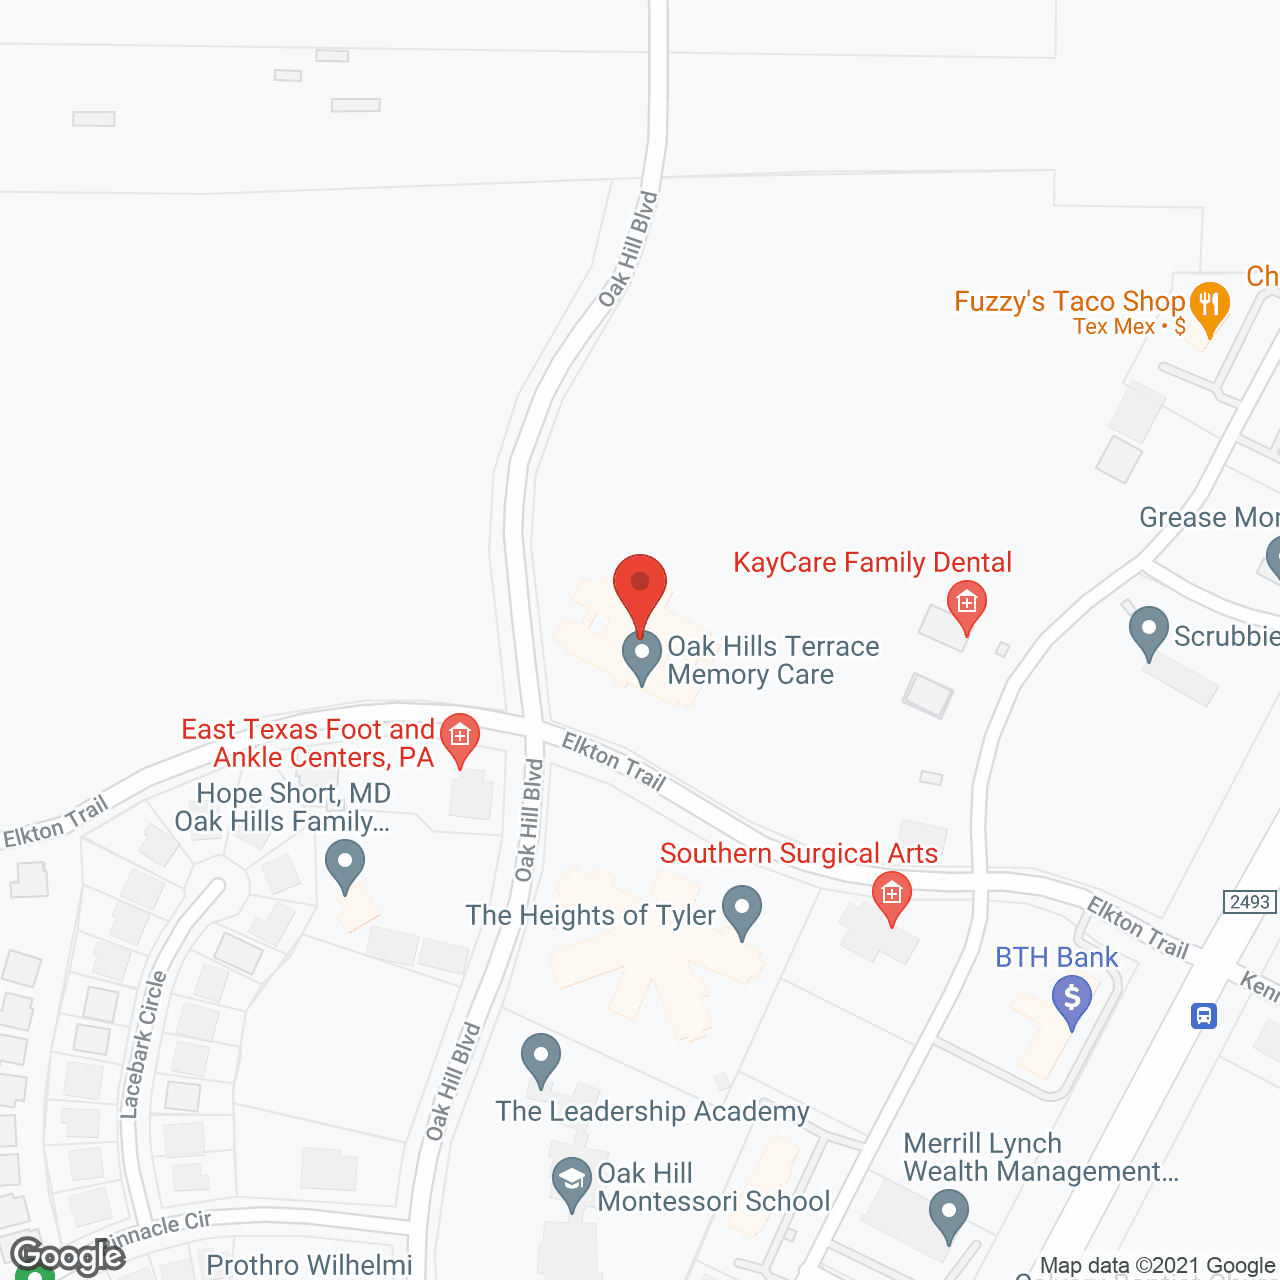 Oak Hills Terrace Memory Care in google map